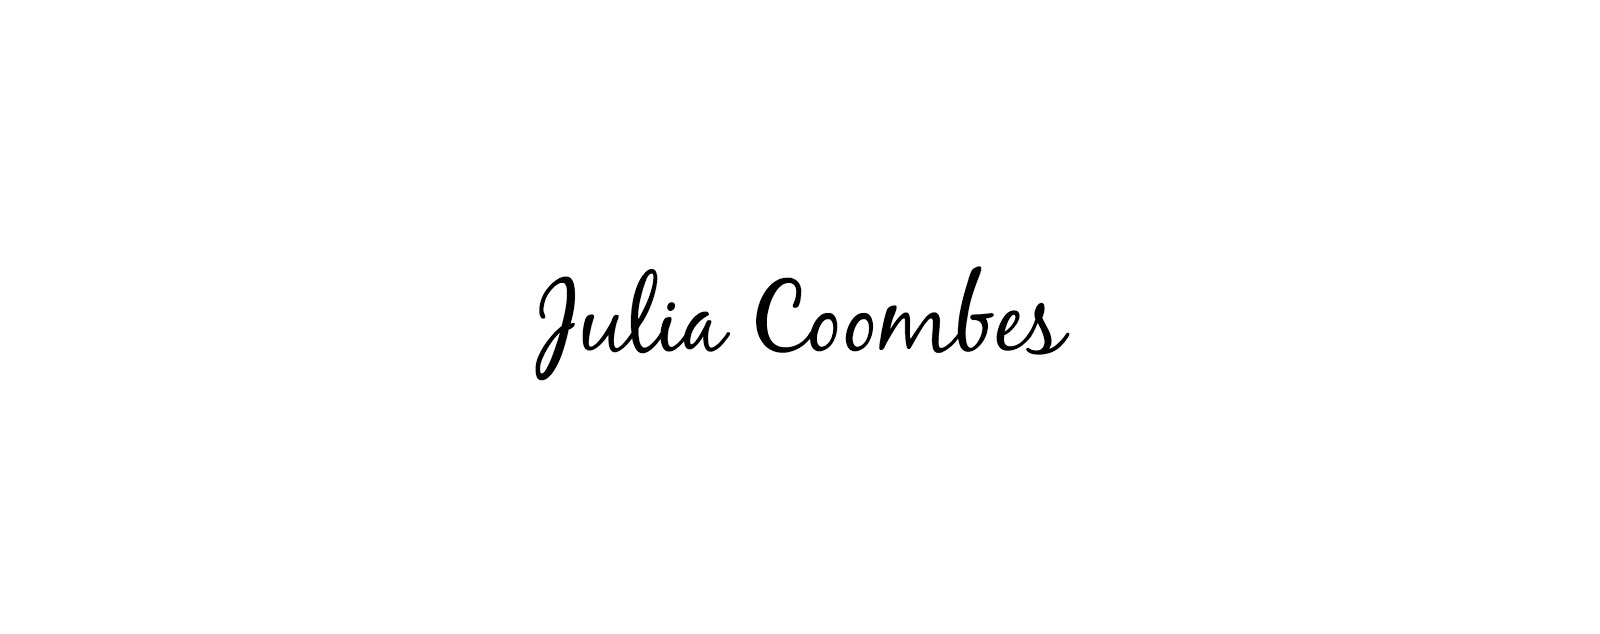 Julia Coombes